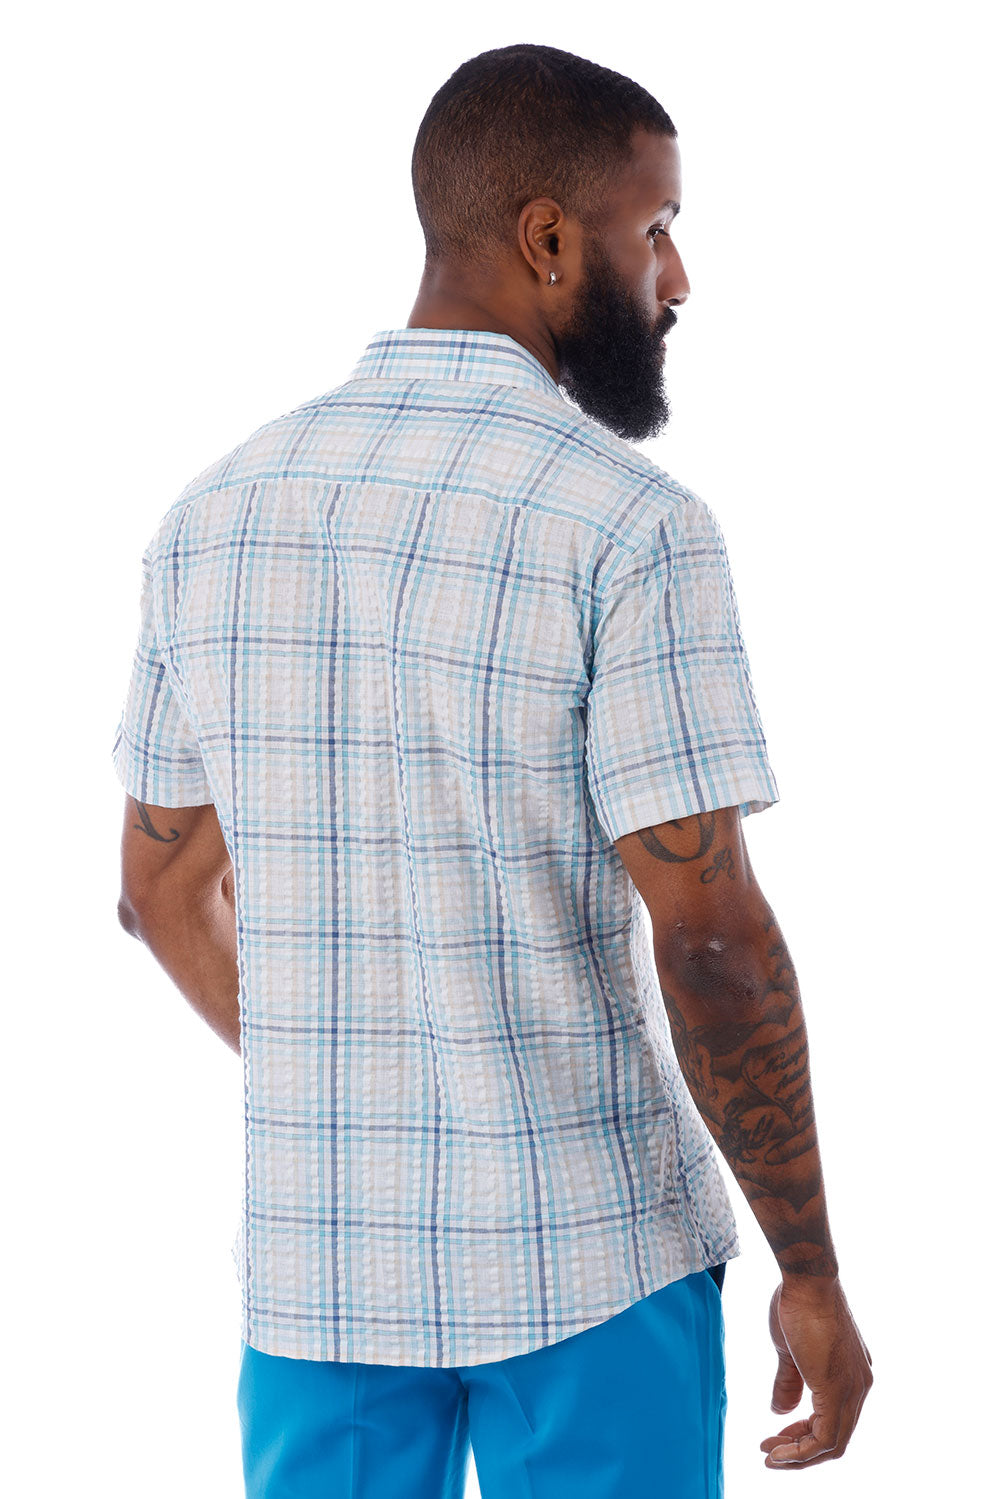 BARABAS Men's Striped Checkered Short Sleeve Shirts 4SST09 Blue White